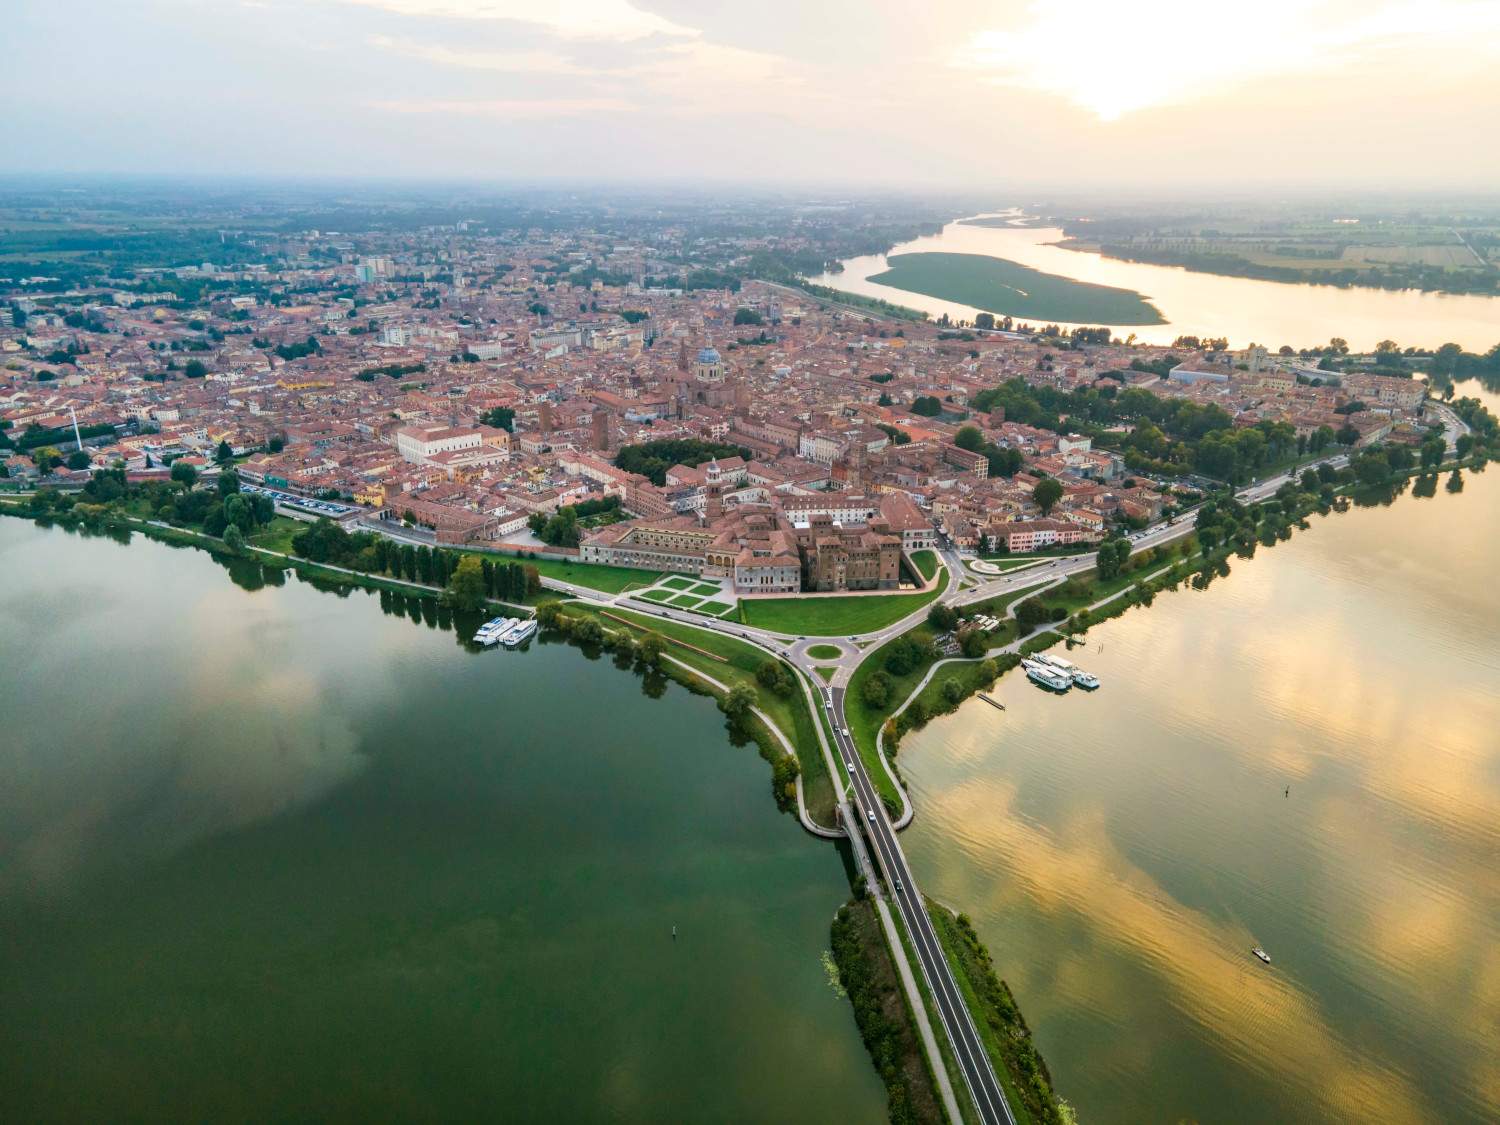 Mantua city of water, art and nature